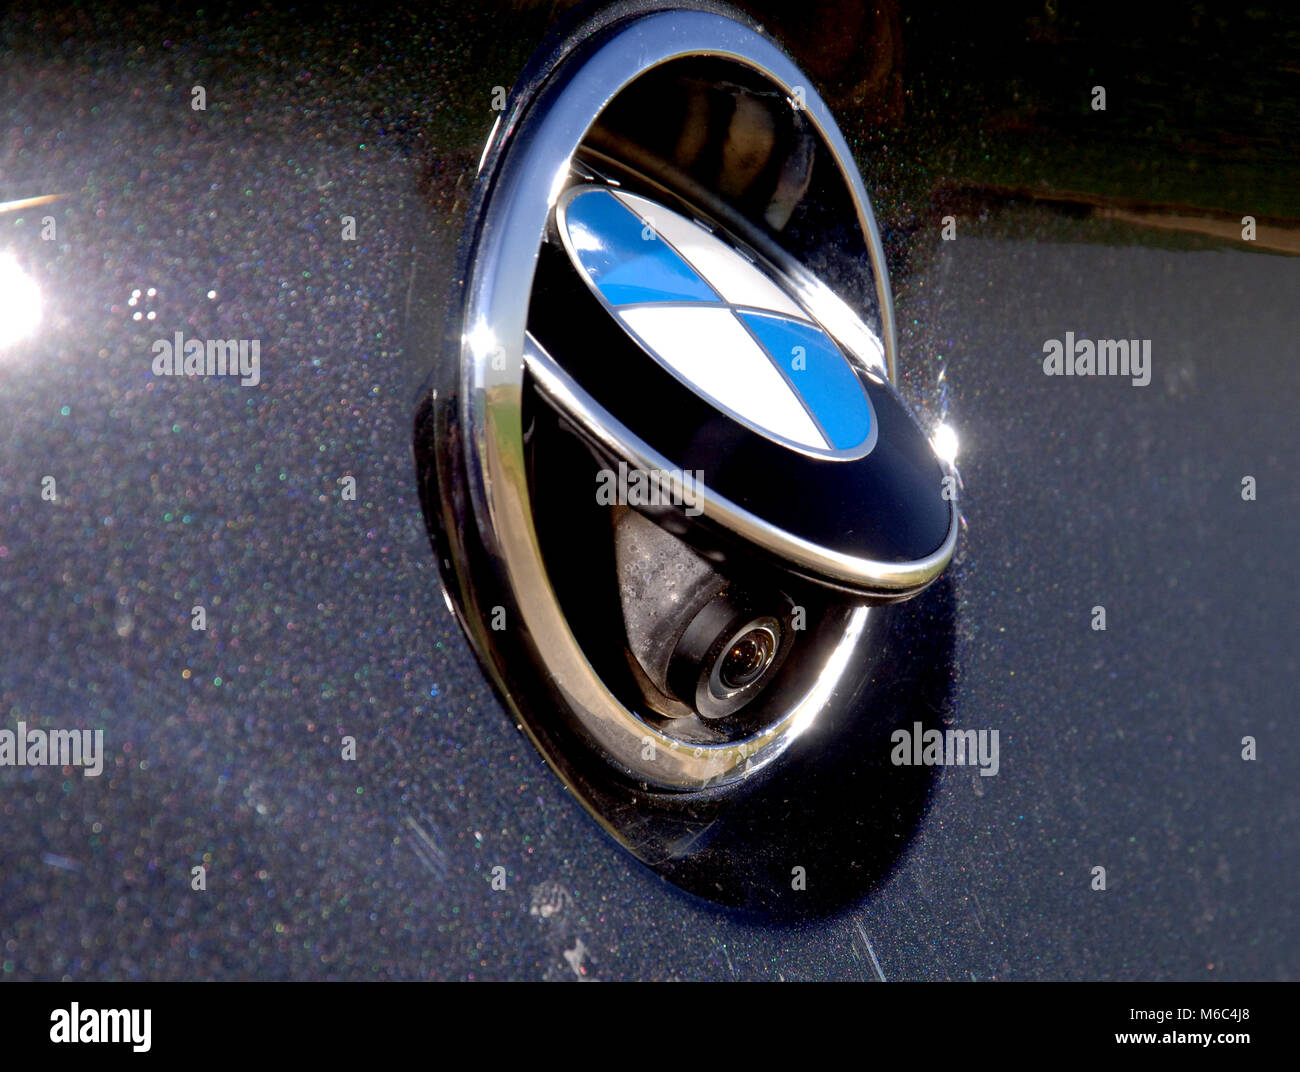 reversing camera behind the badge on a 2011 BMW 640i 6 Series convertible premium German car Stock Photo